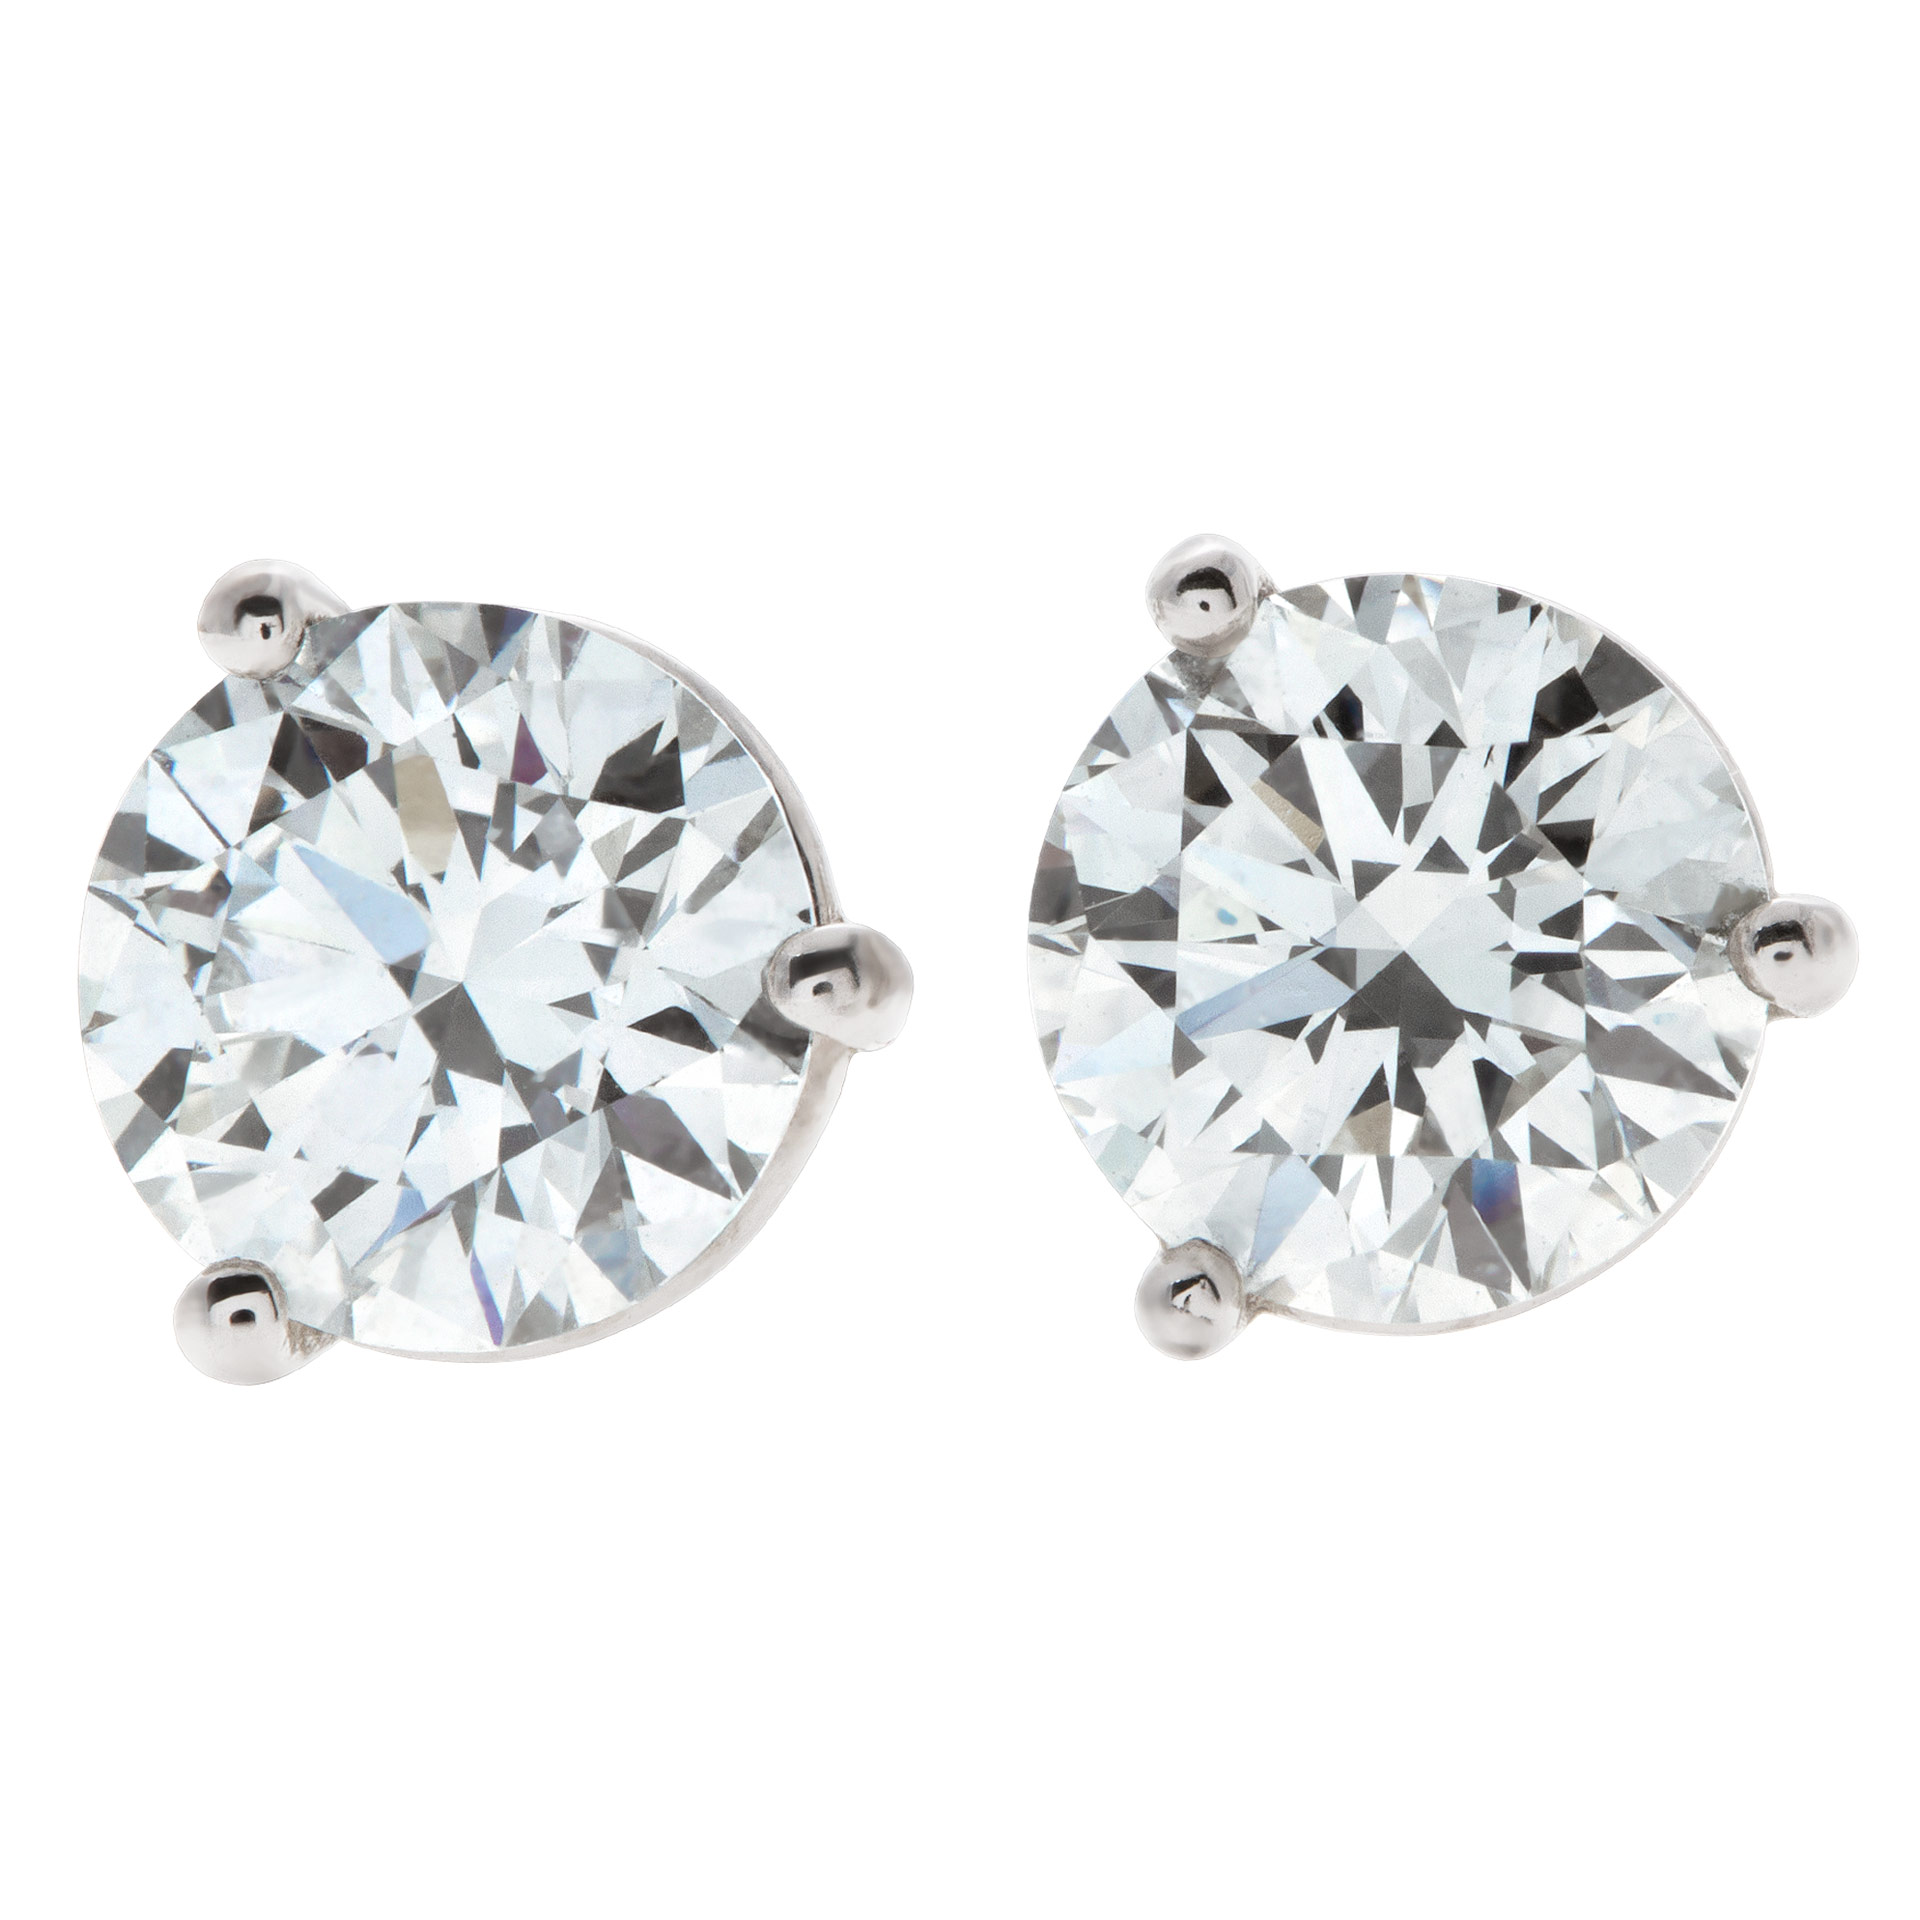 Tiffany & Co. diamond studs earrings 1 carat (I color, VS1 clarity) and 1 carat (I color, VS2 clarity) image 1